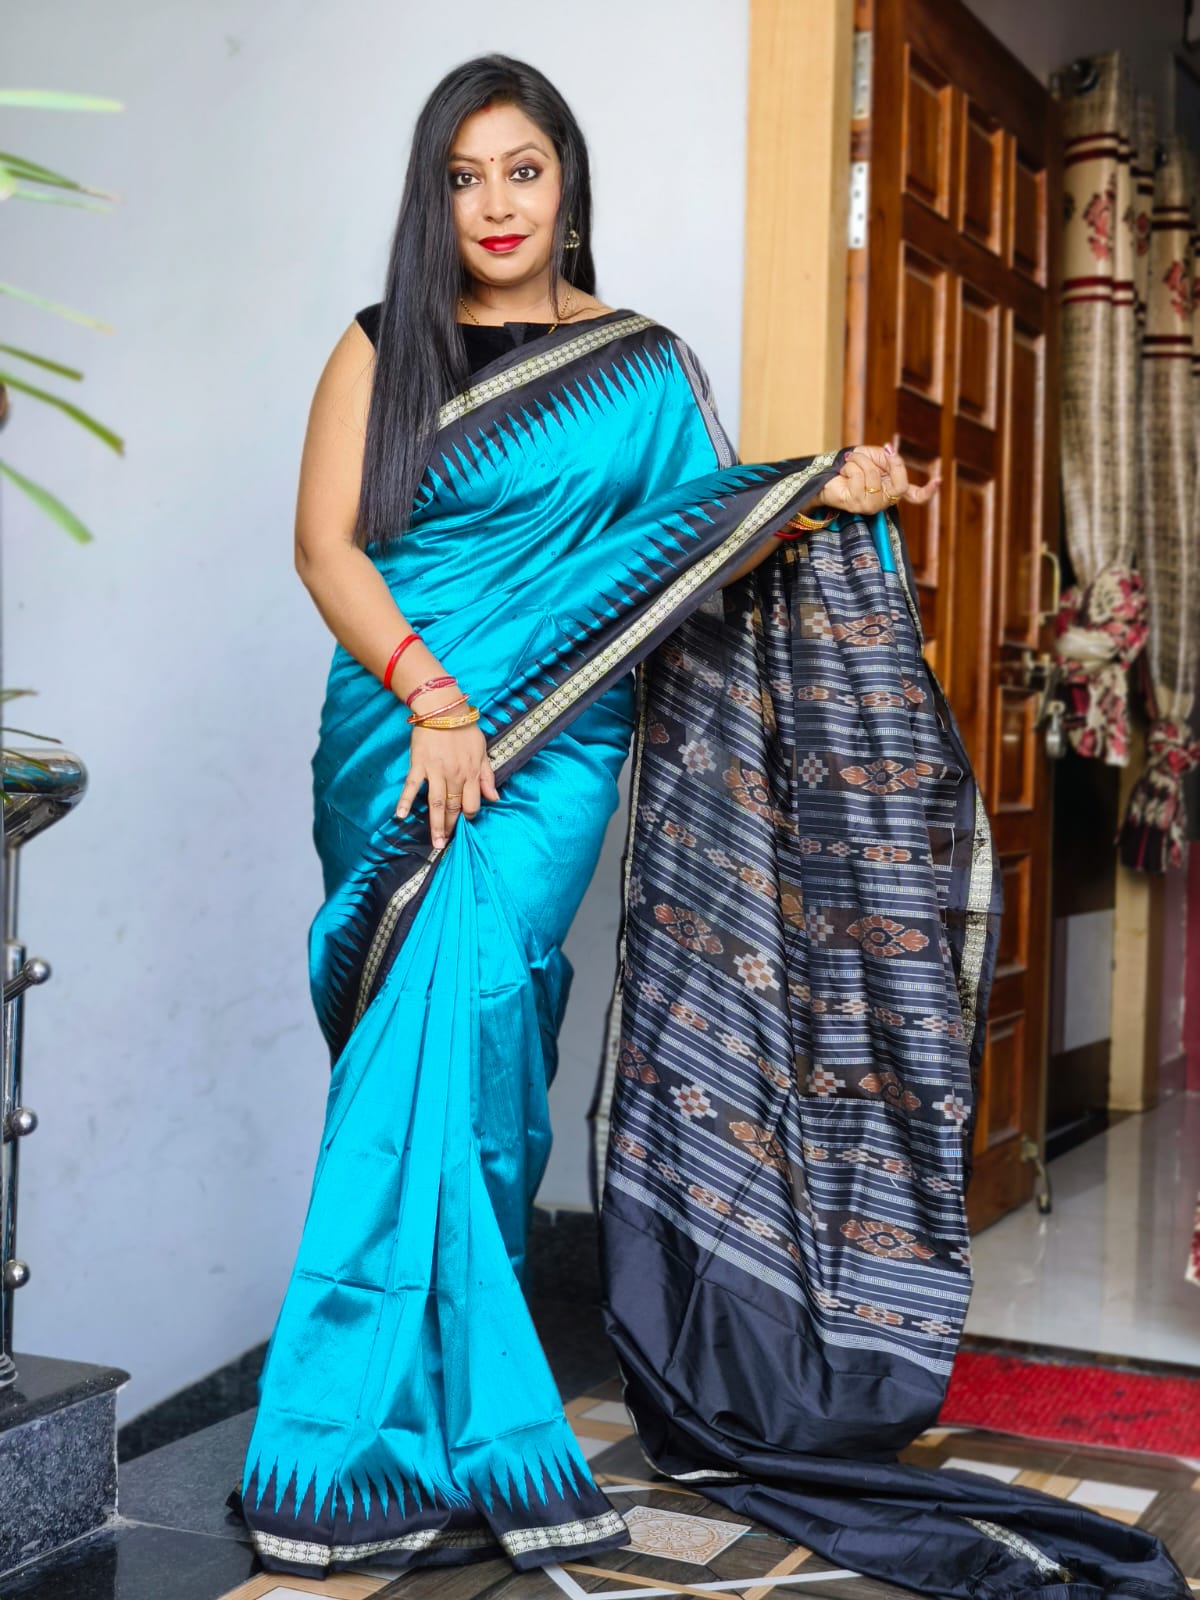 Pallu flowers pattern plain pata saree is Sky-blue and black color base. - Koshali Arts & Crafts Enterprise